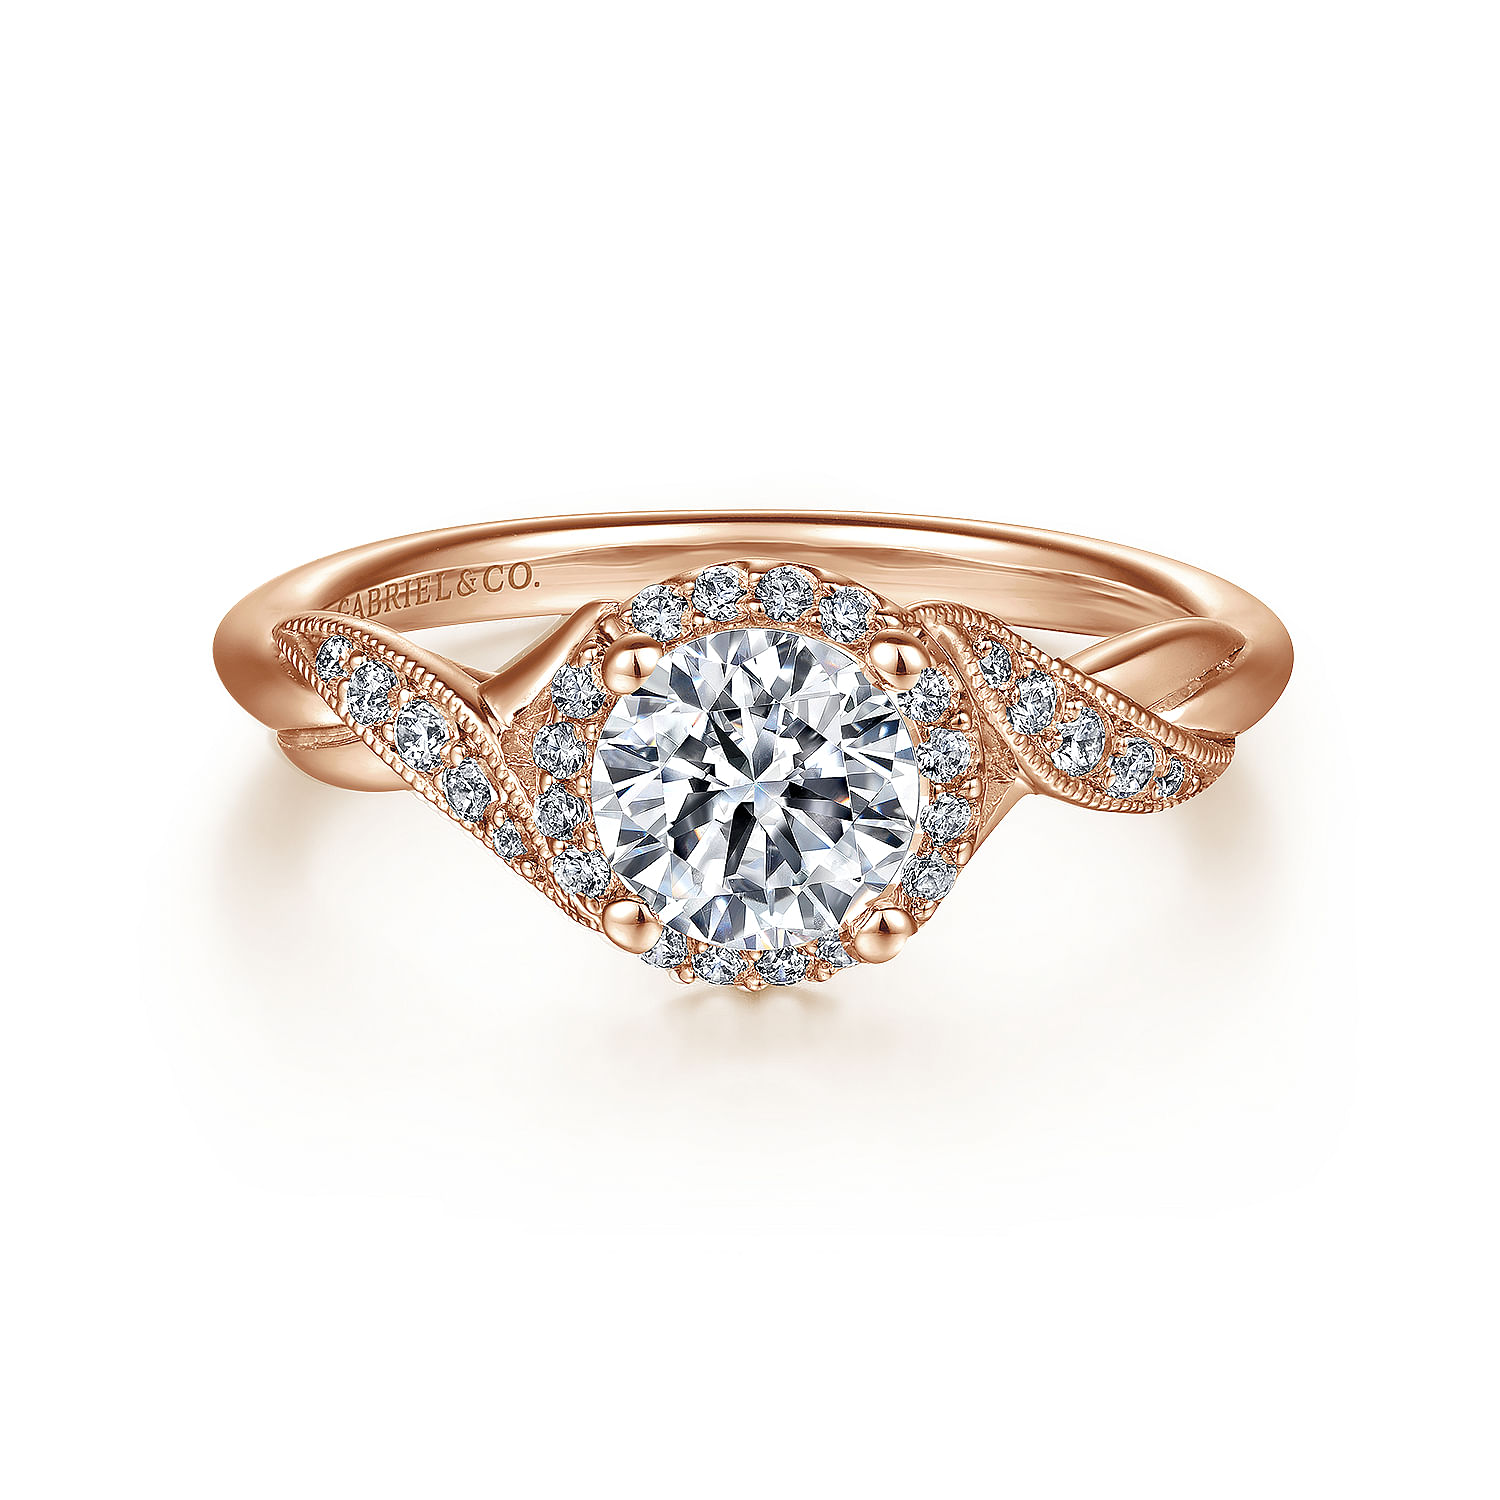 Shae - Vintage Inspired 14K Rose Gold Round Halo Diamond Engagement Ring